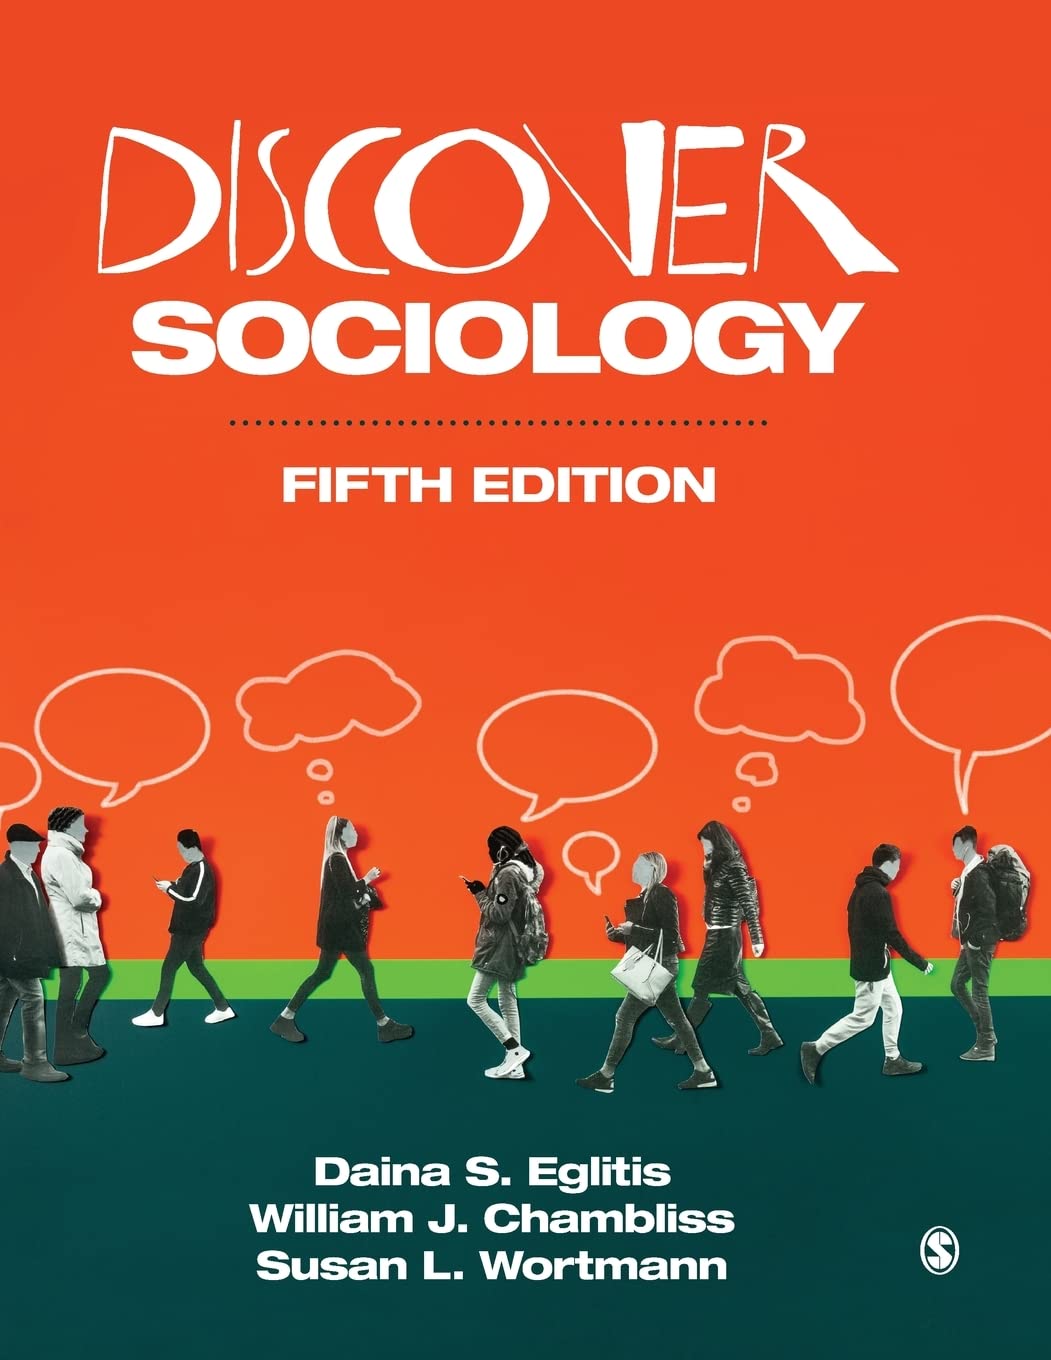 full test bank Discover Sociology by Eglitis 5e